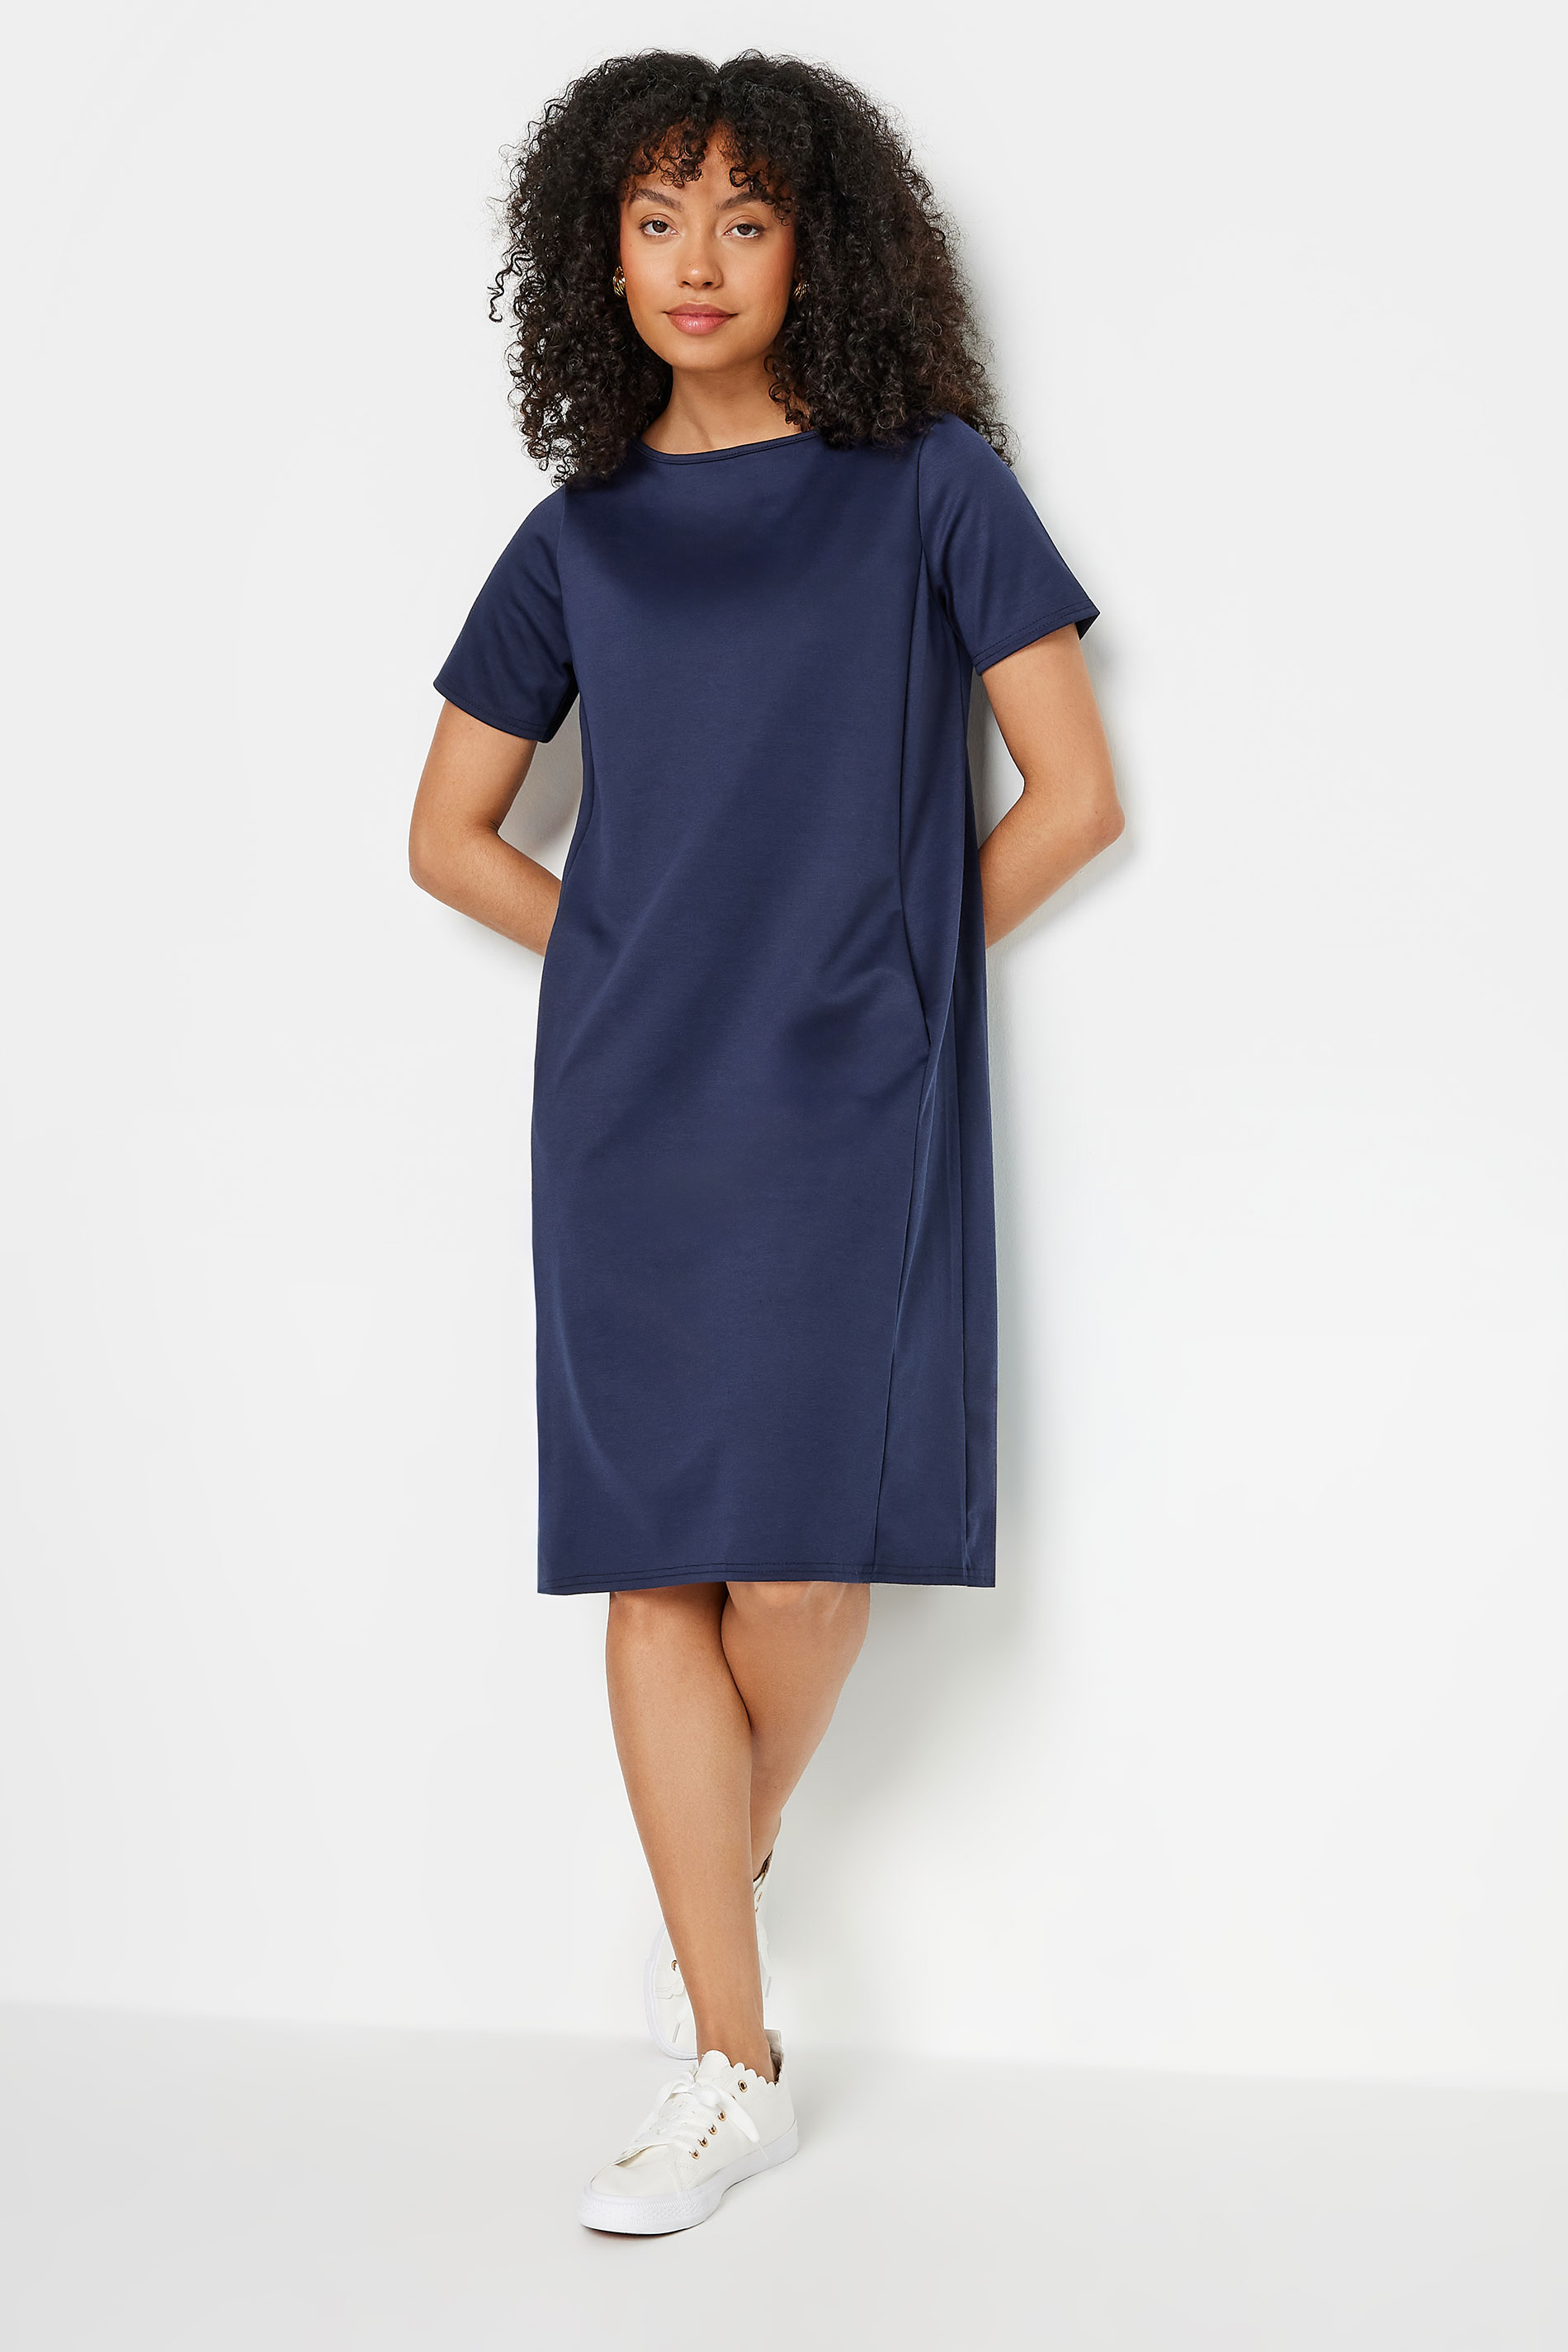 M&Co Navy Blue Short Sleeve Ponte Swing Dress | M&Co 2